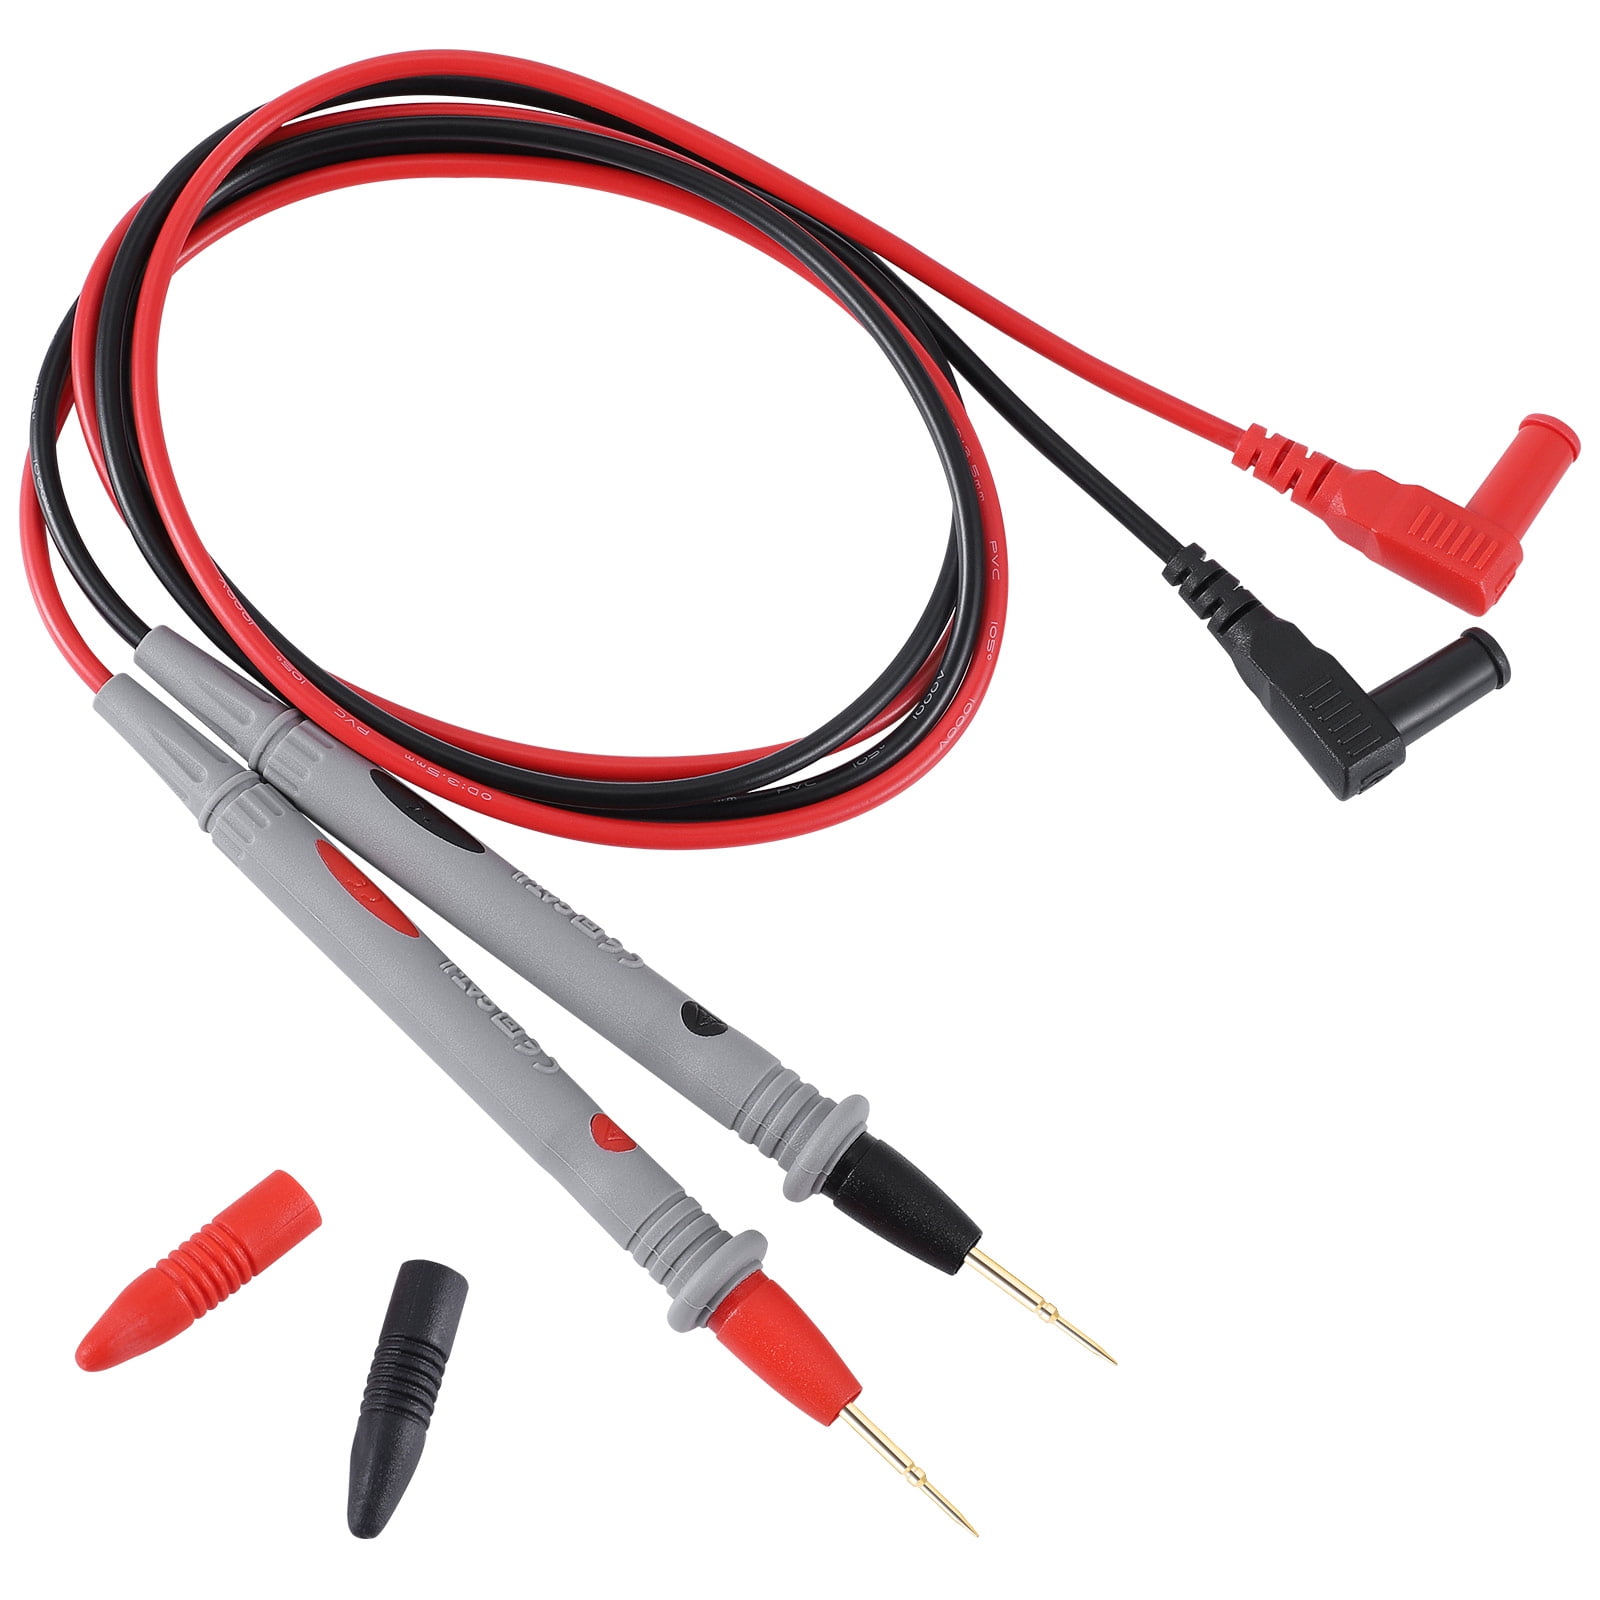 2016 Hot Digital Multimeter Multi Meter Test Lead Probe Wire Pen Cable HIYJXI 